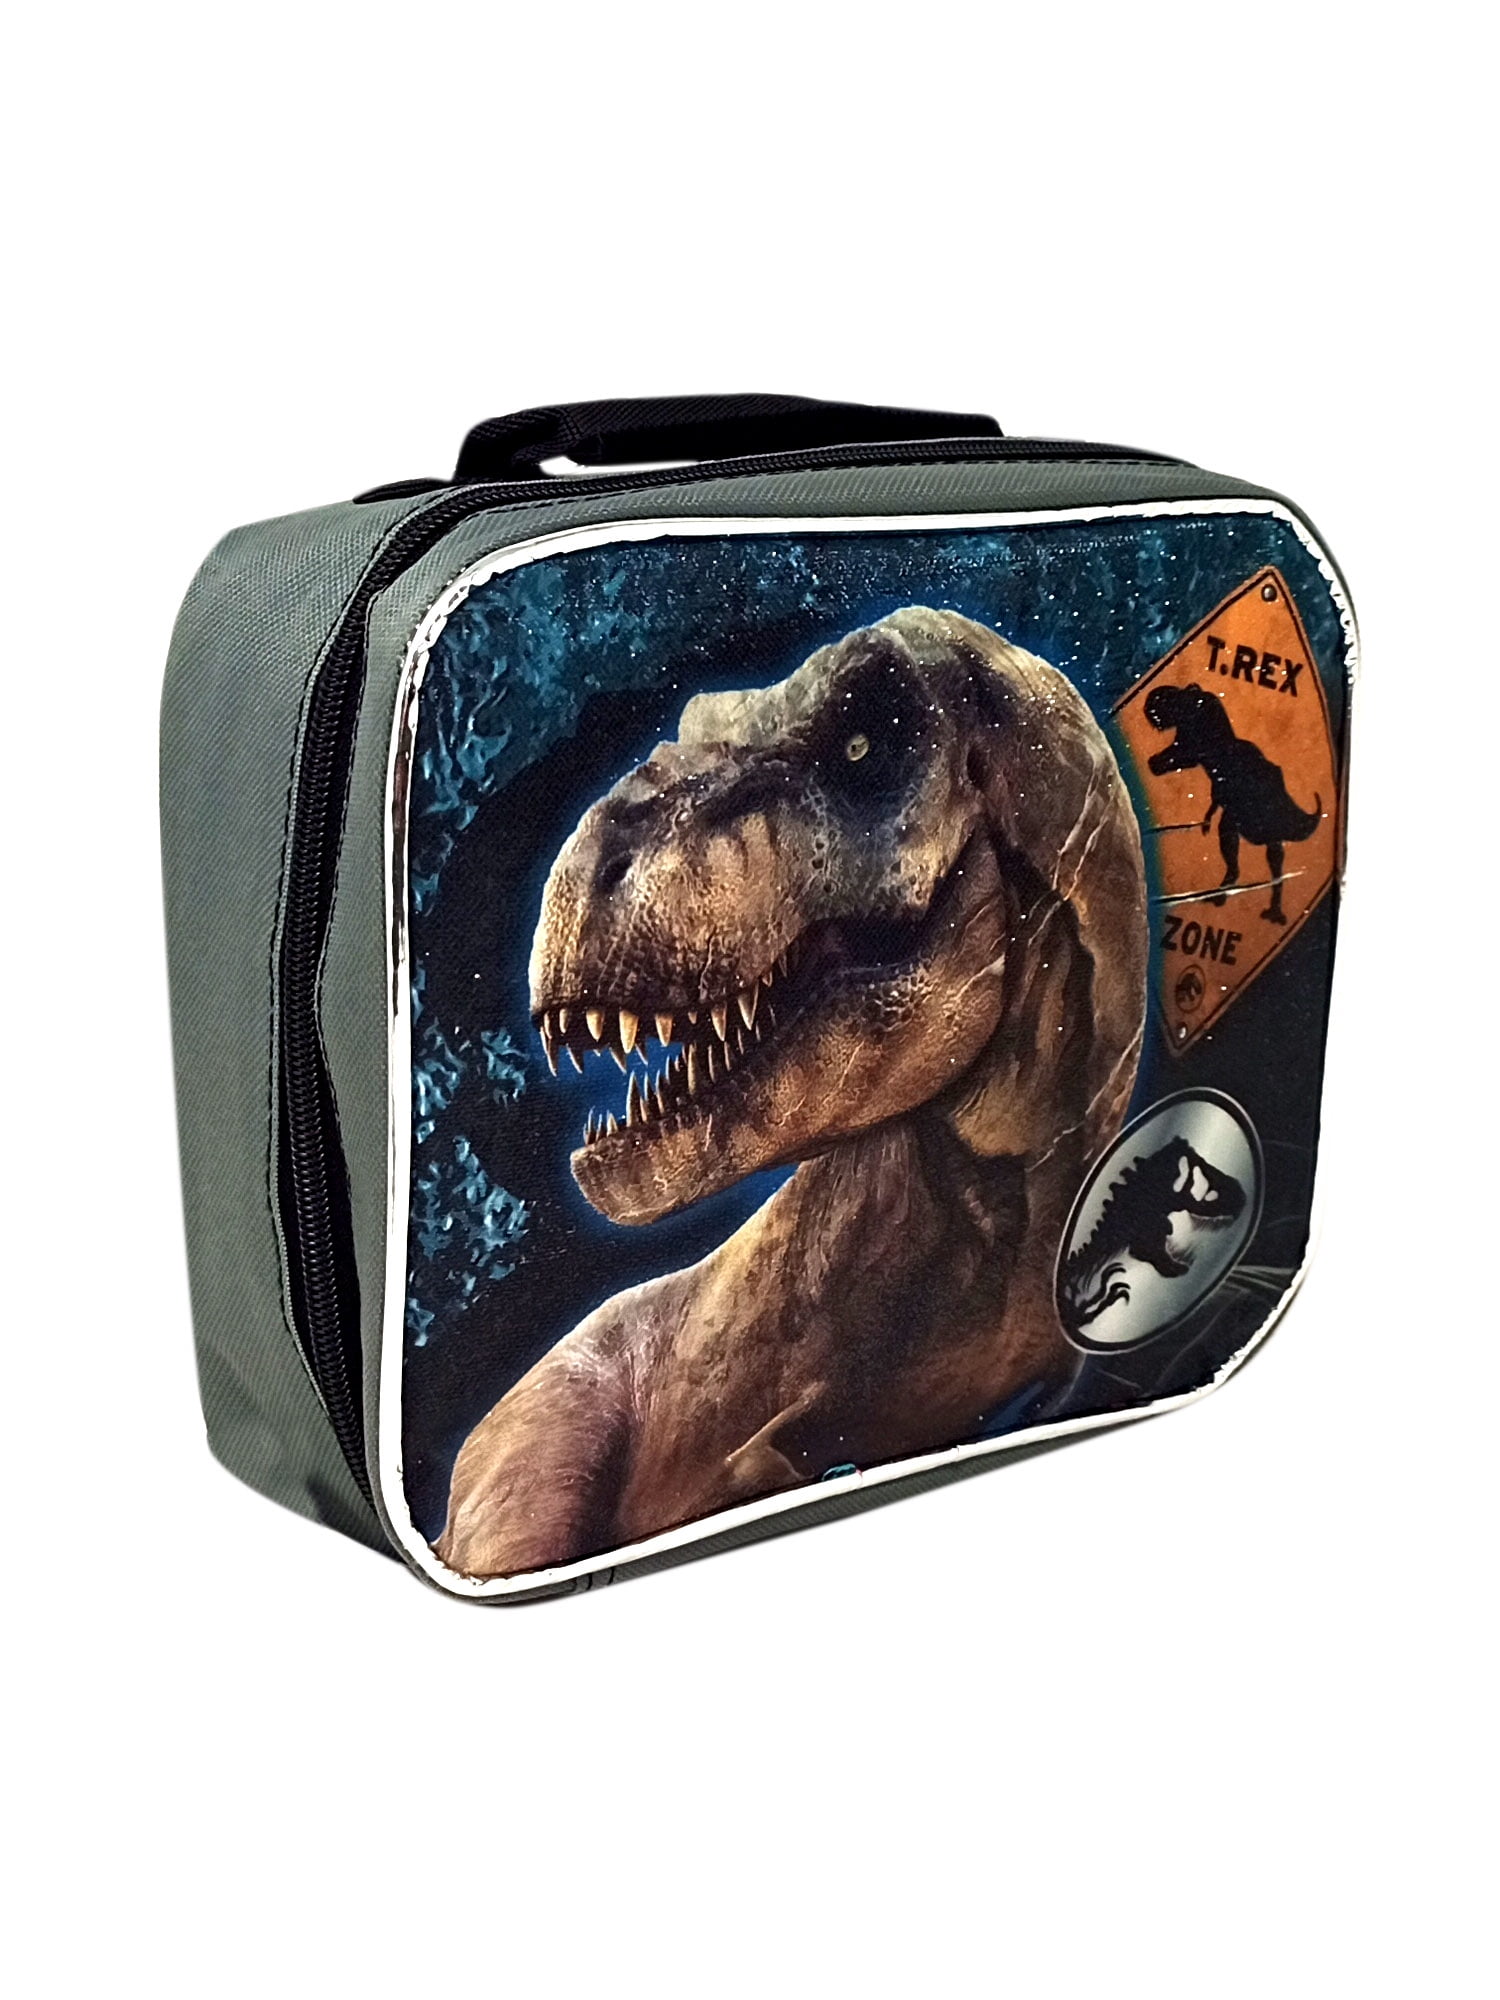 Fast Forward jurassic park lunch box kids - bundle with dinosaur